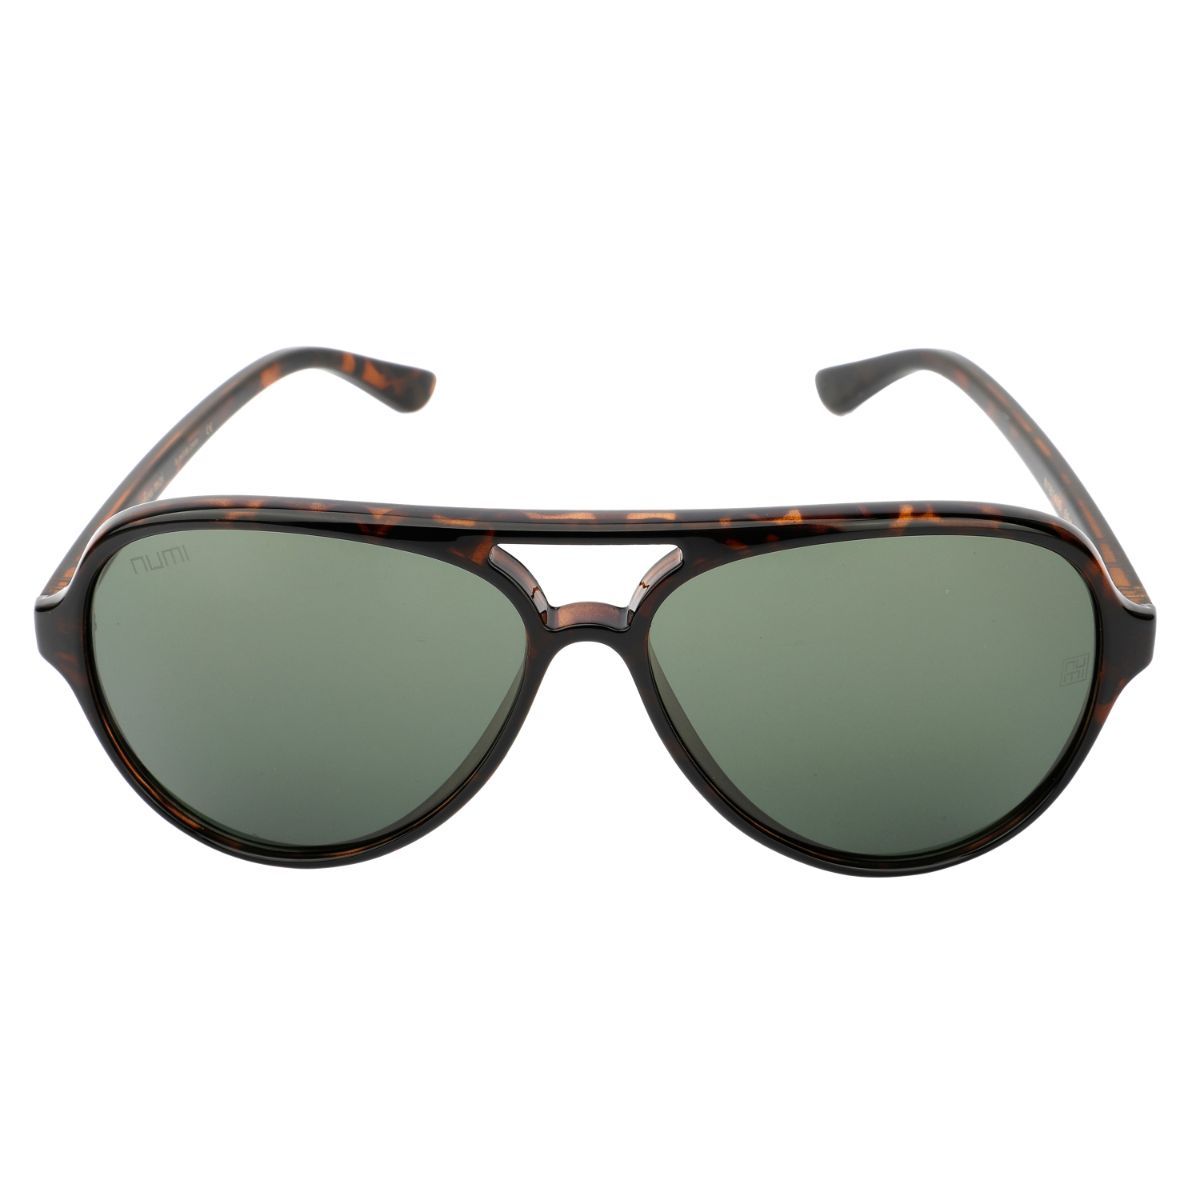 NUMI Green Aviator UV Protected Sunglasses N18149SCL5